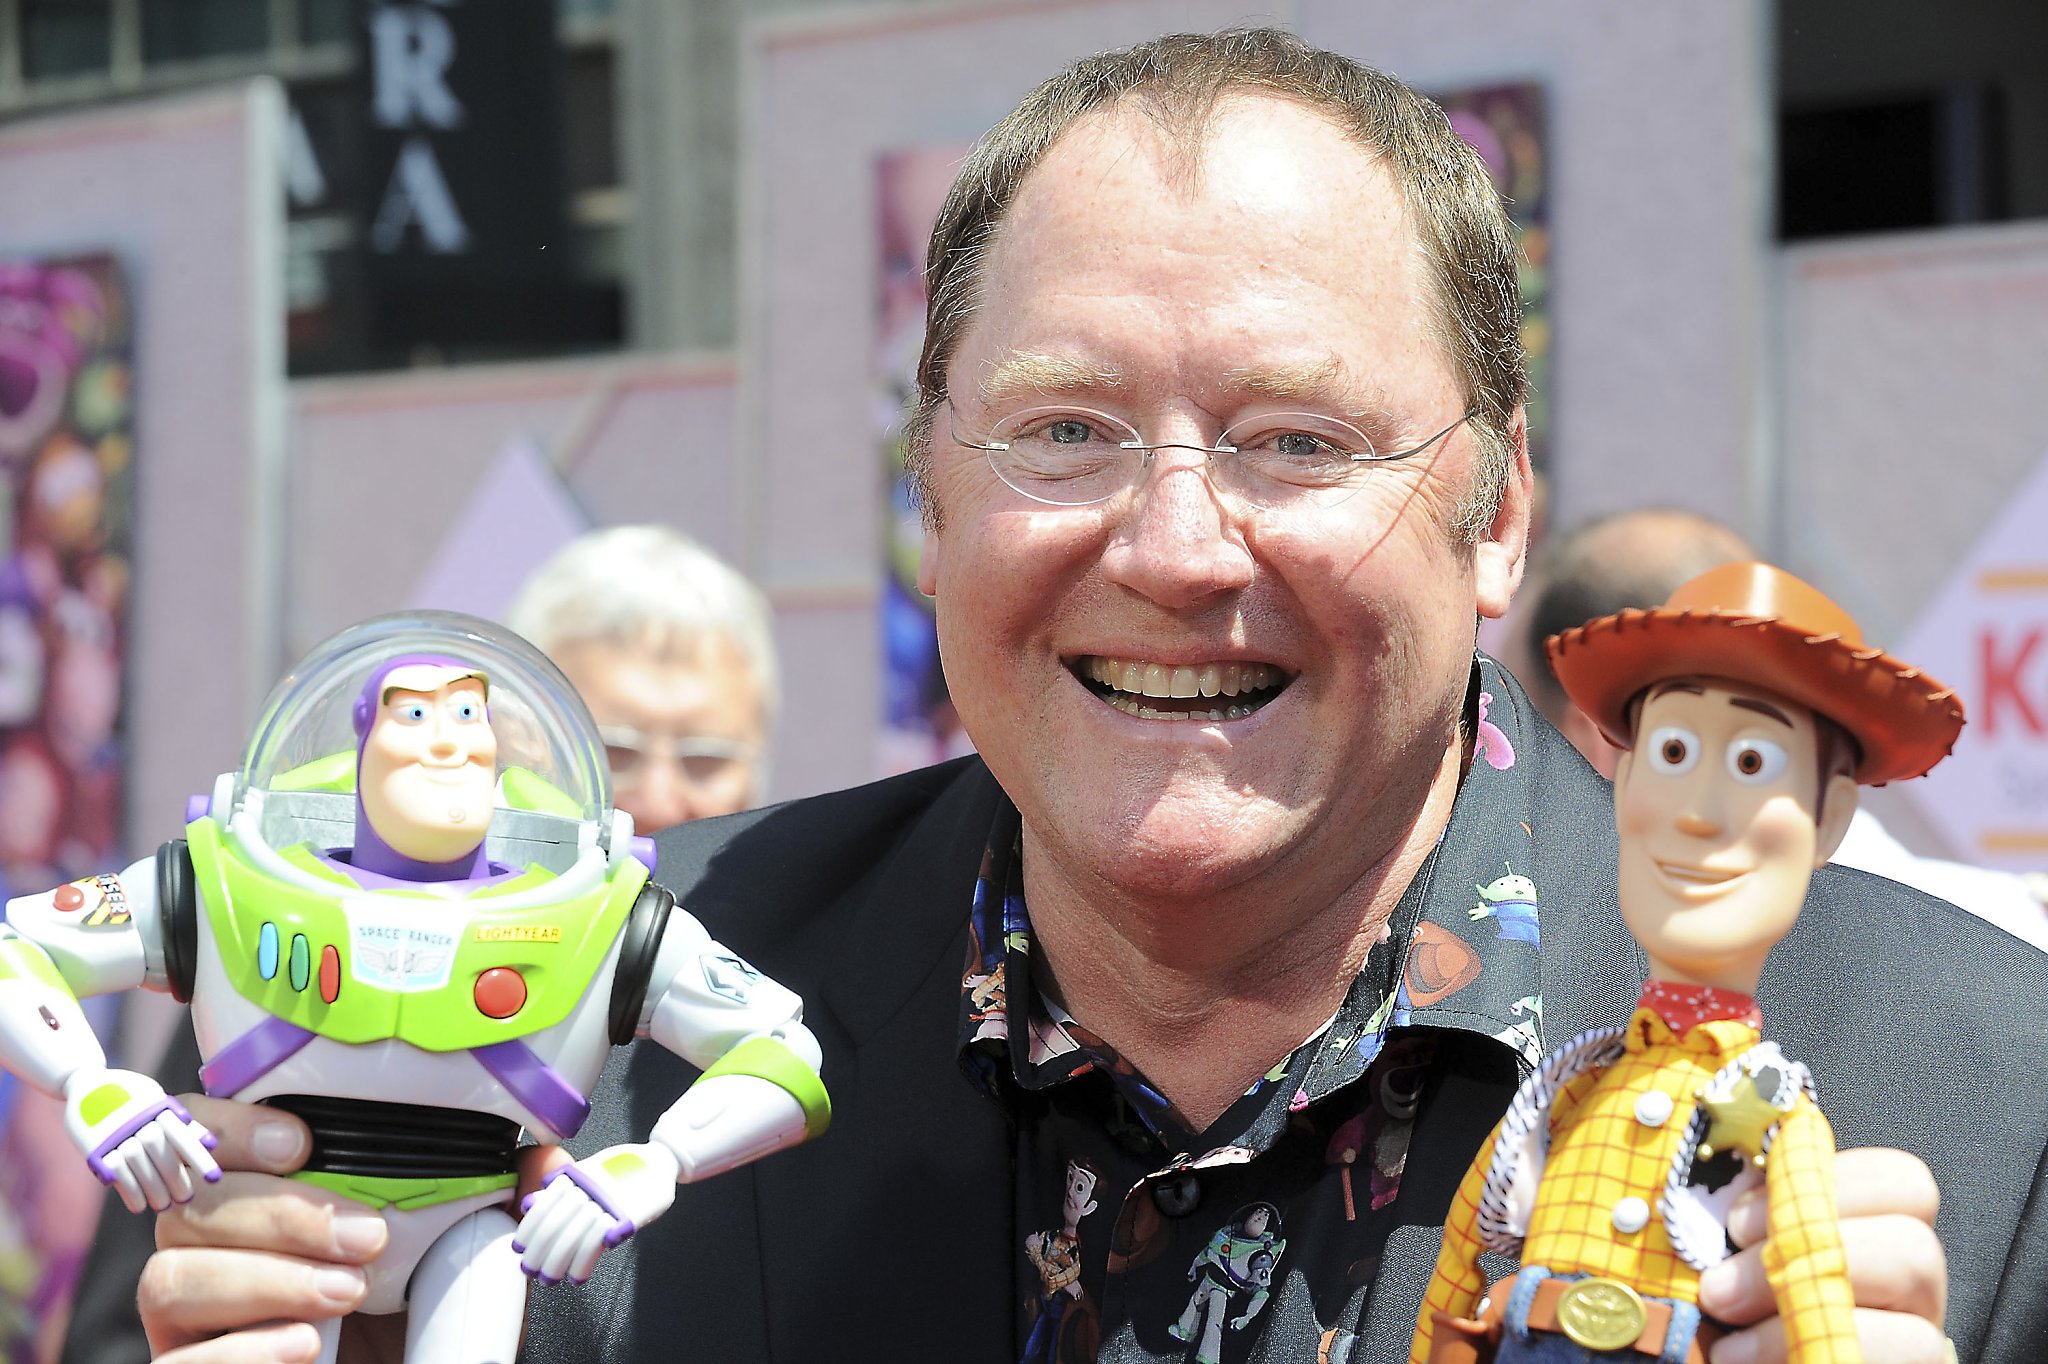 Ousted Pixar co-founder John Lasseter to join Skydance Media